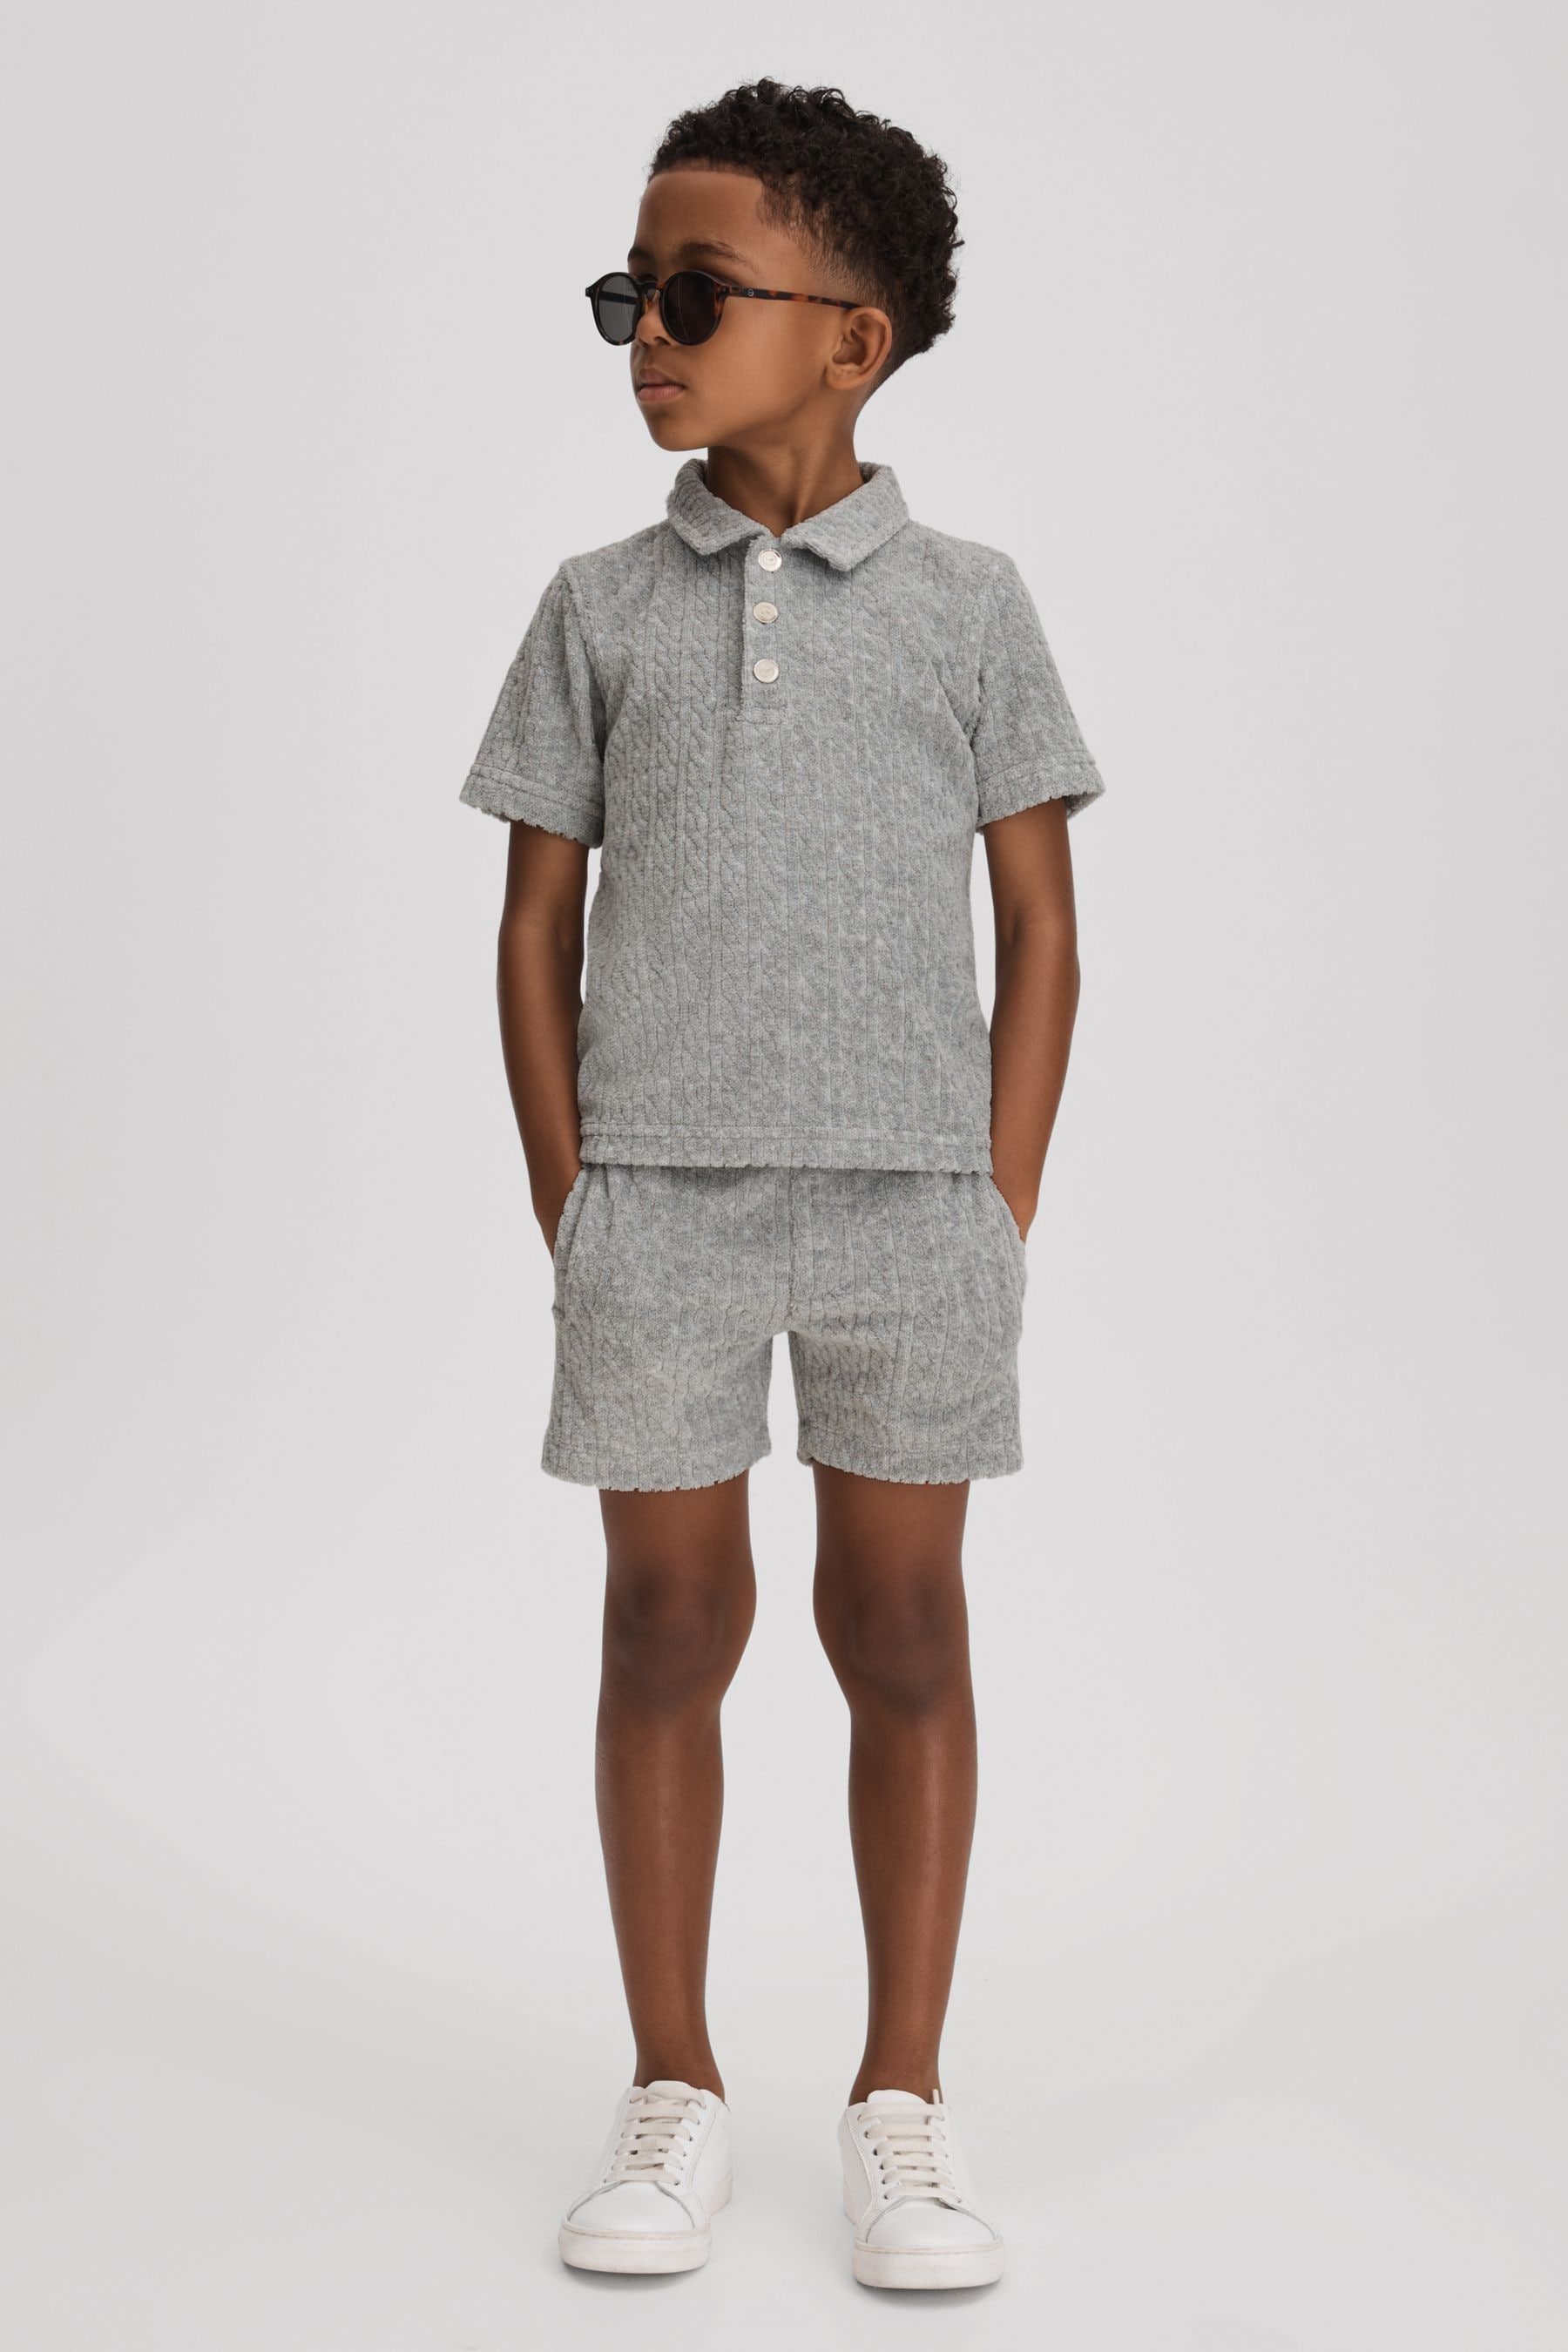 Reiss Kids' Fletcher - Soft Grey Junior Towelling Drawstring Shorts, Age 3-4 Years